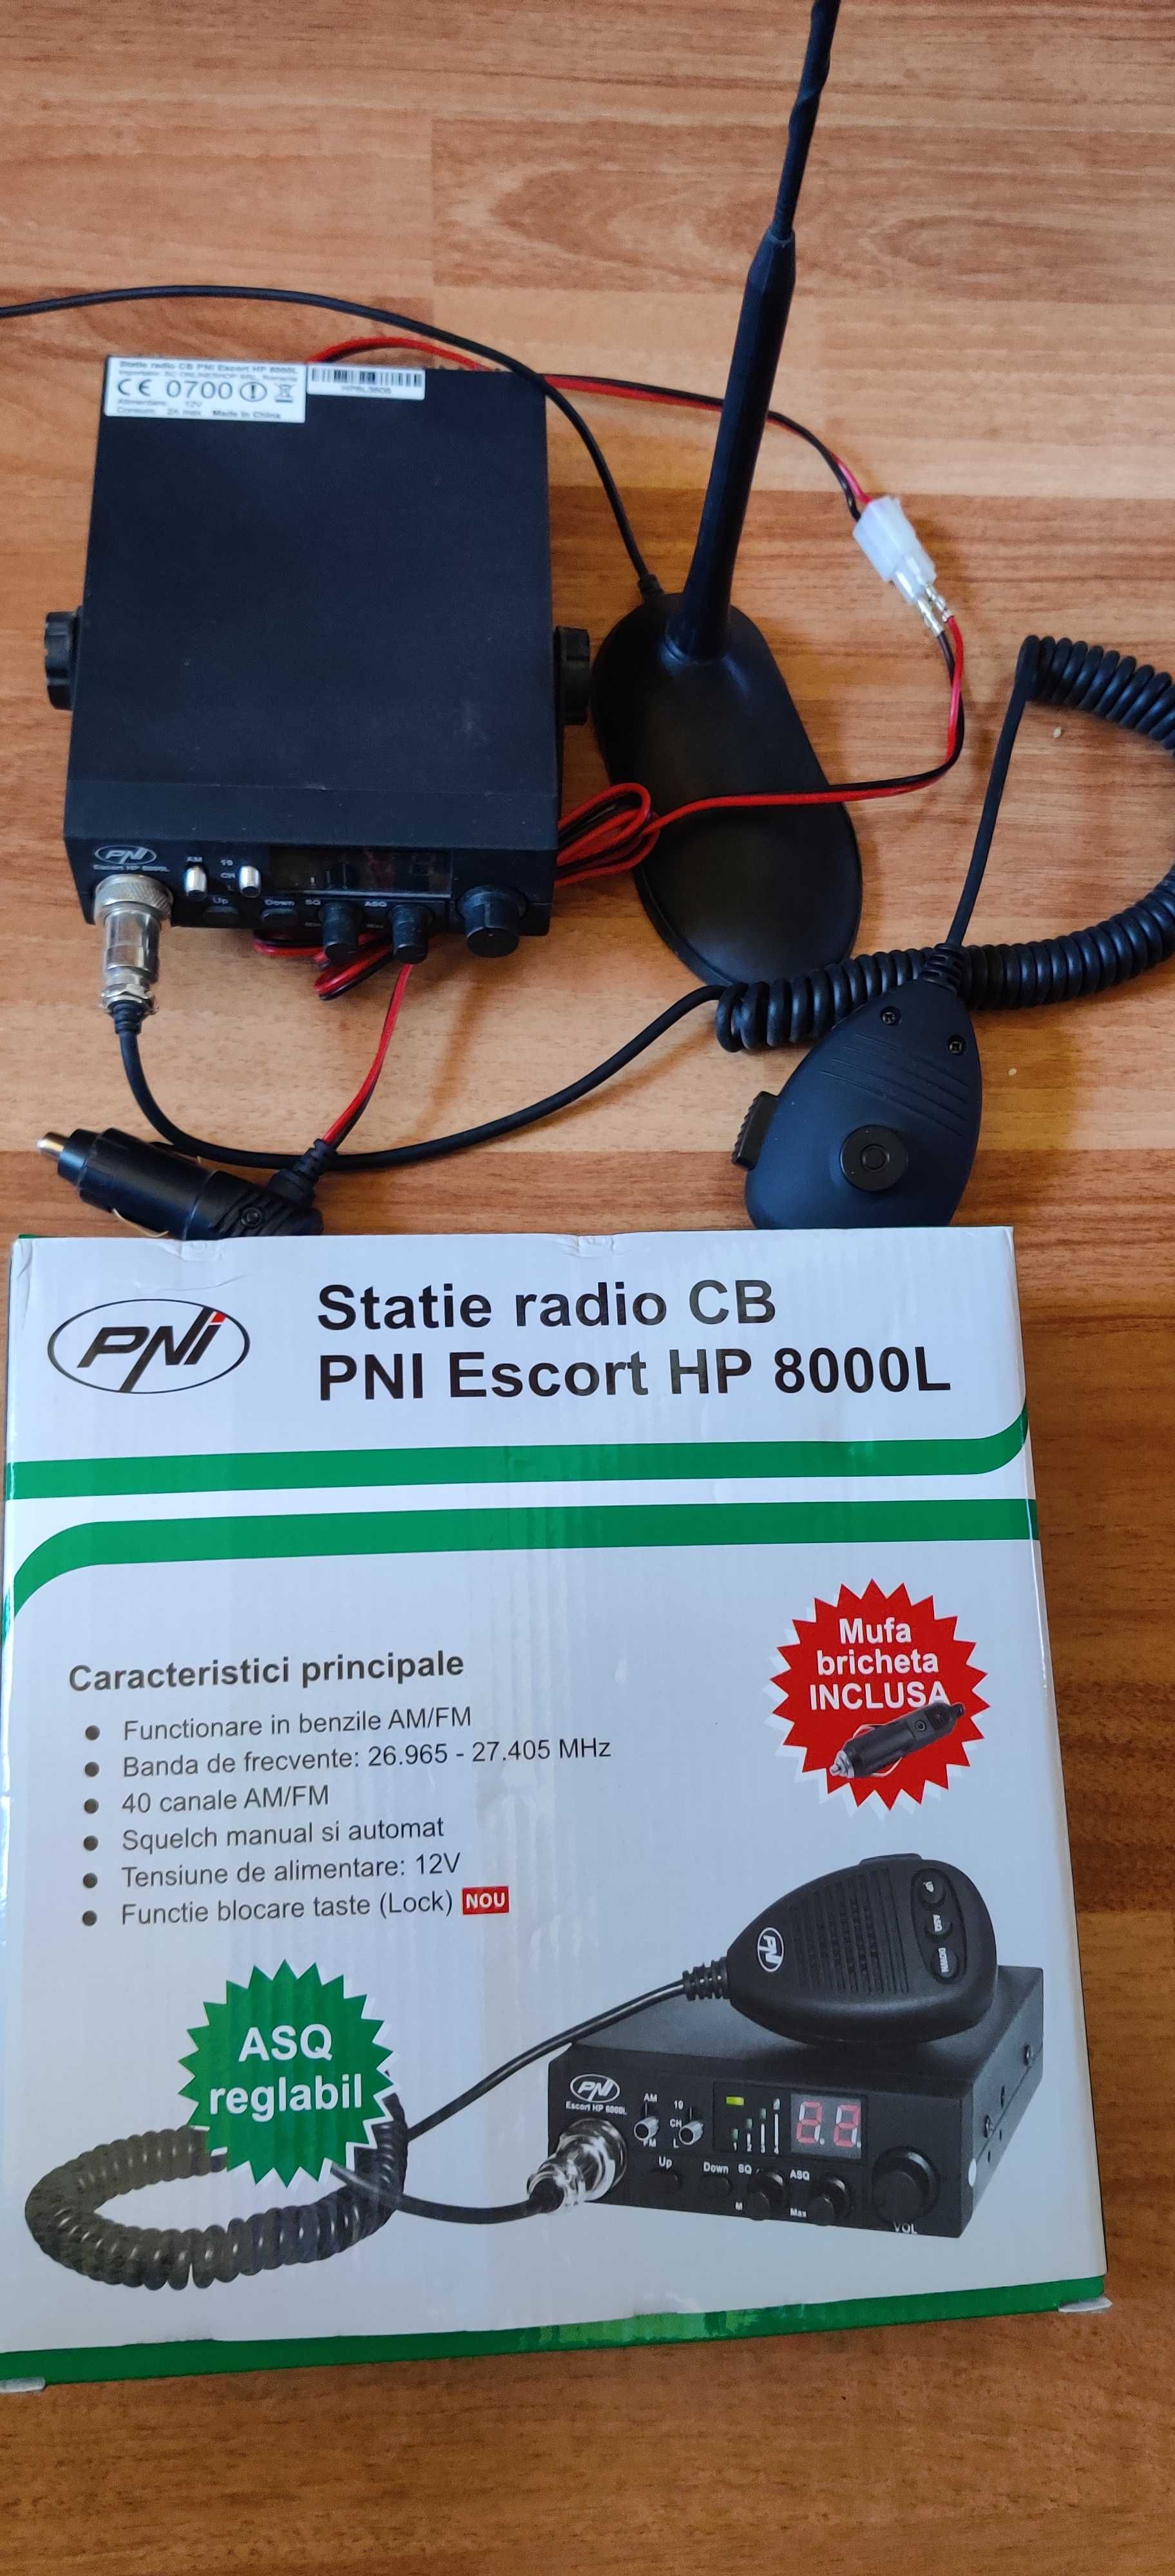 Stație portabilă Baofeng UV 82 Plus  și stație CB PNI Escort HP 8000L